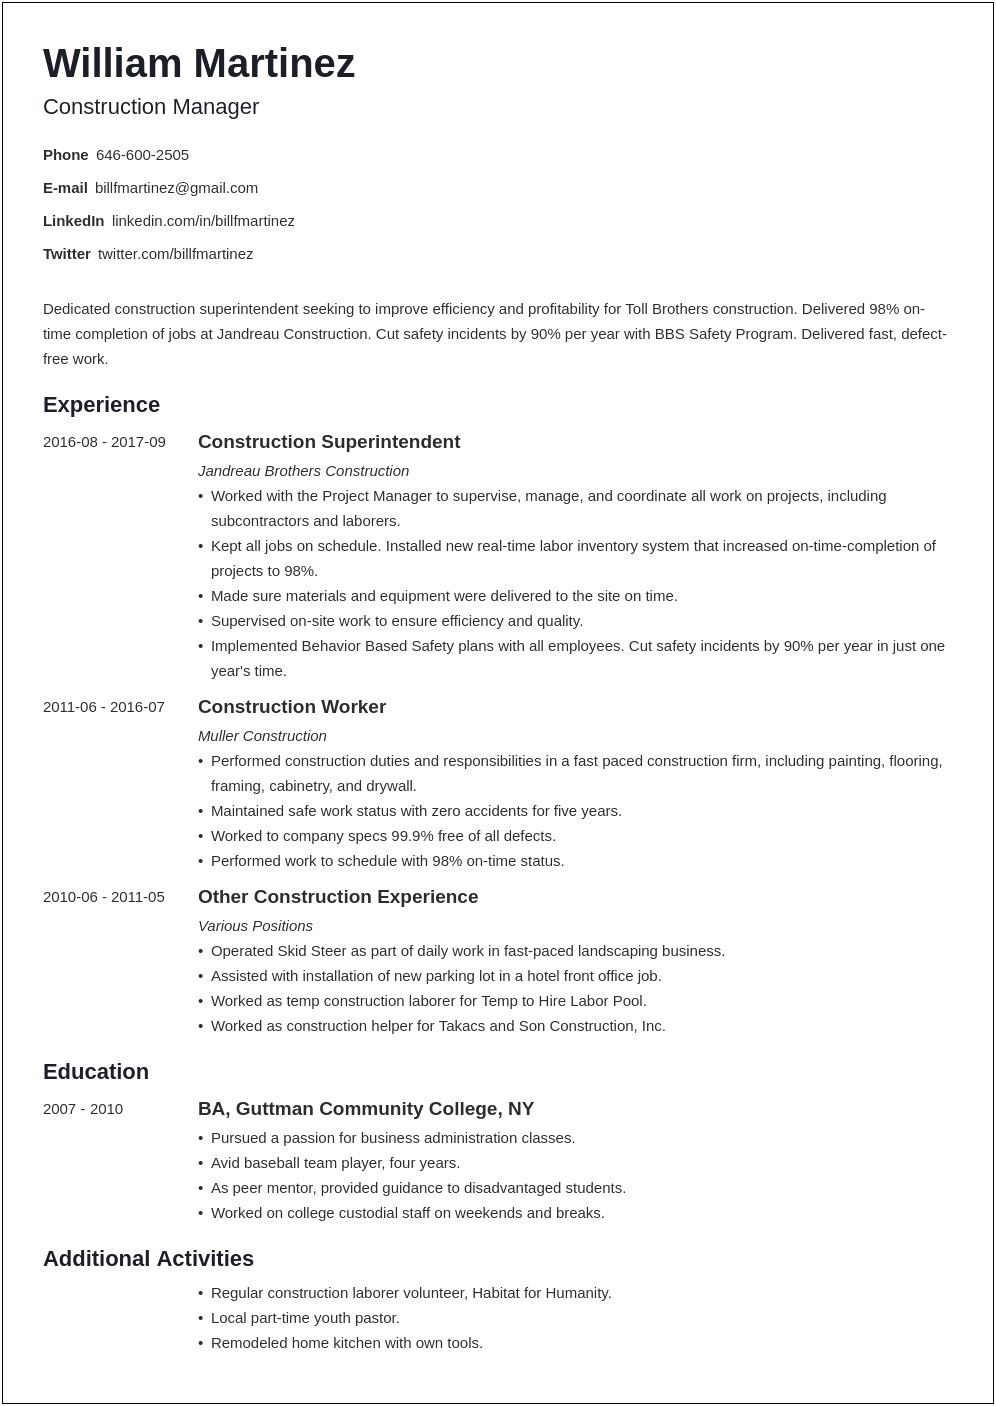 Construction Resume Professional Summary Entry Level